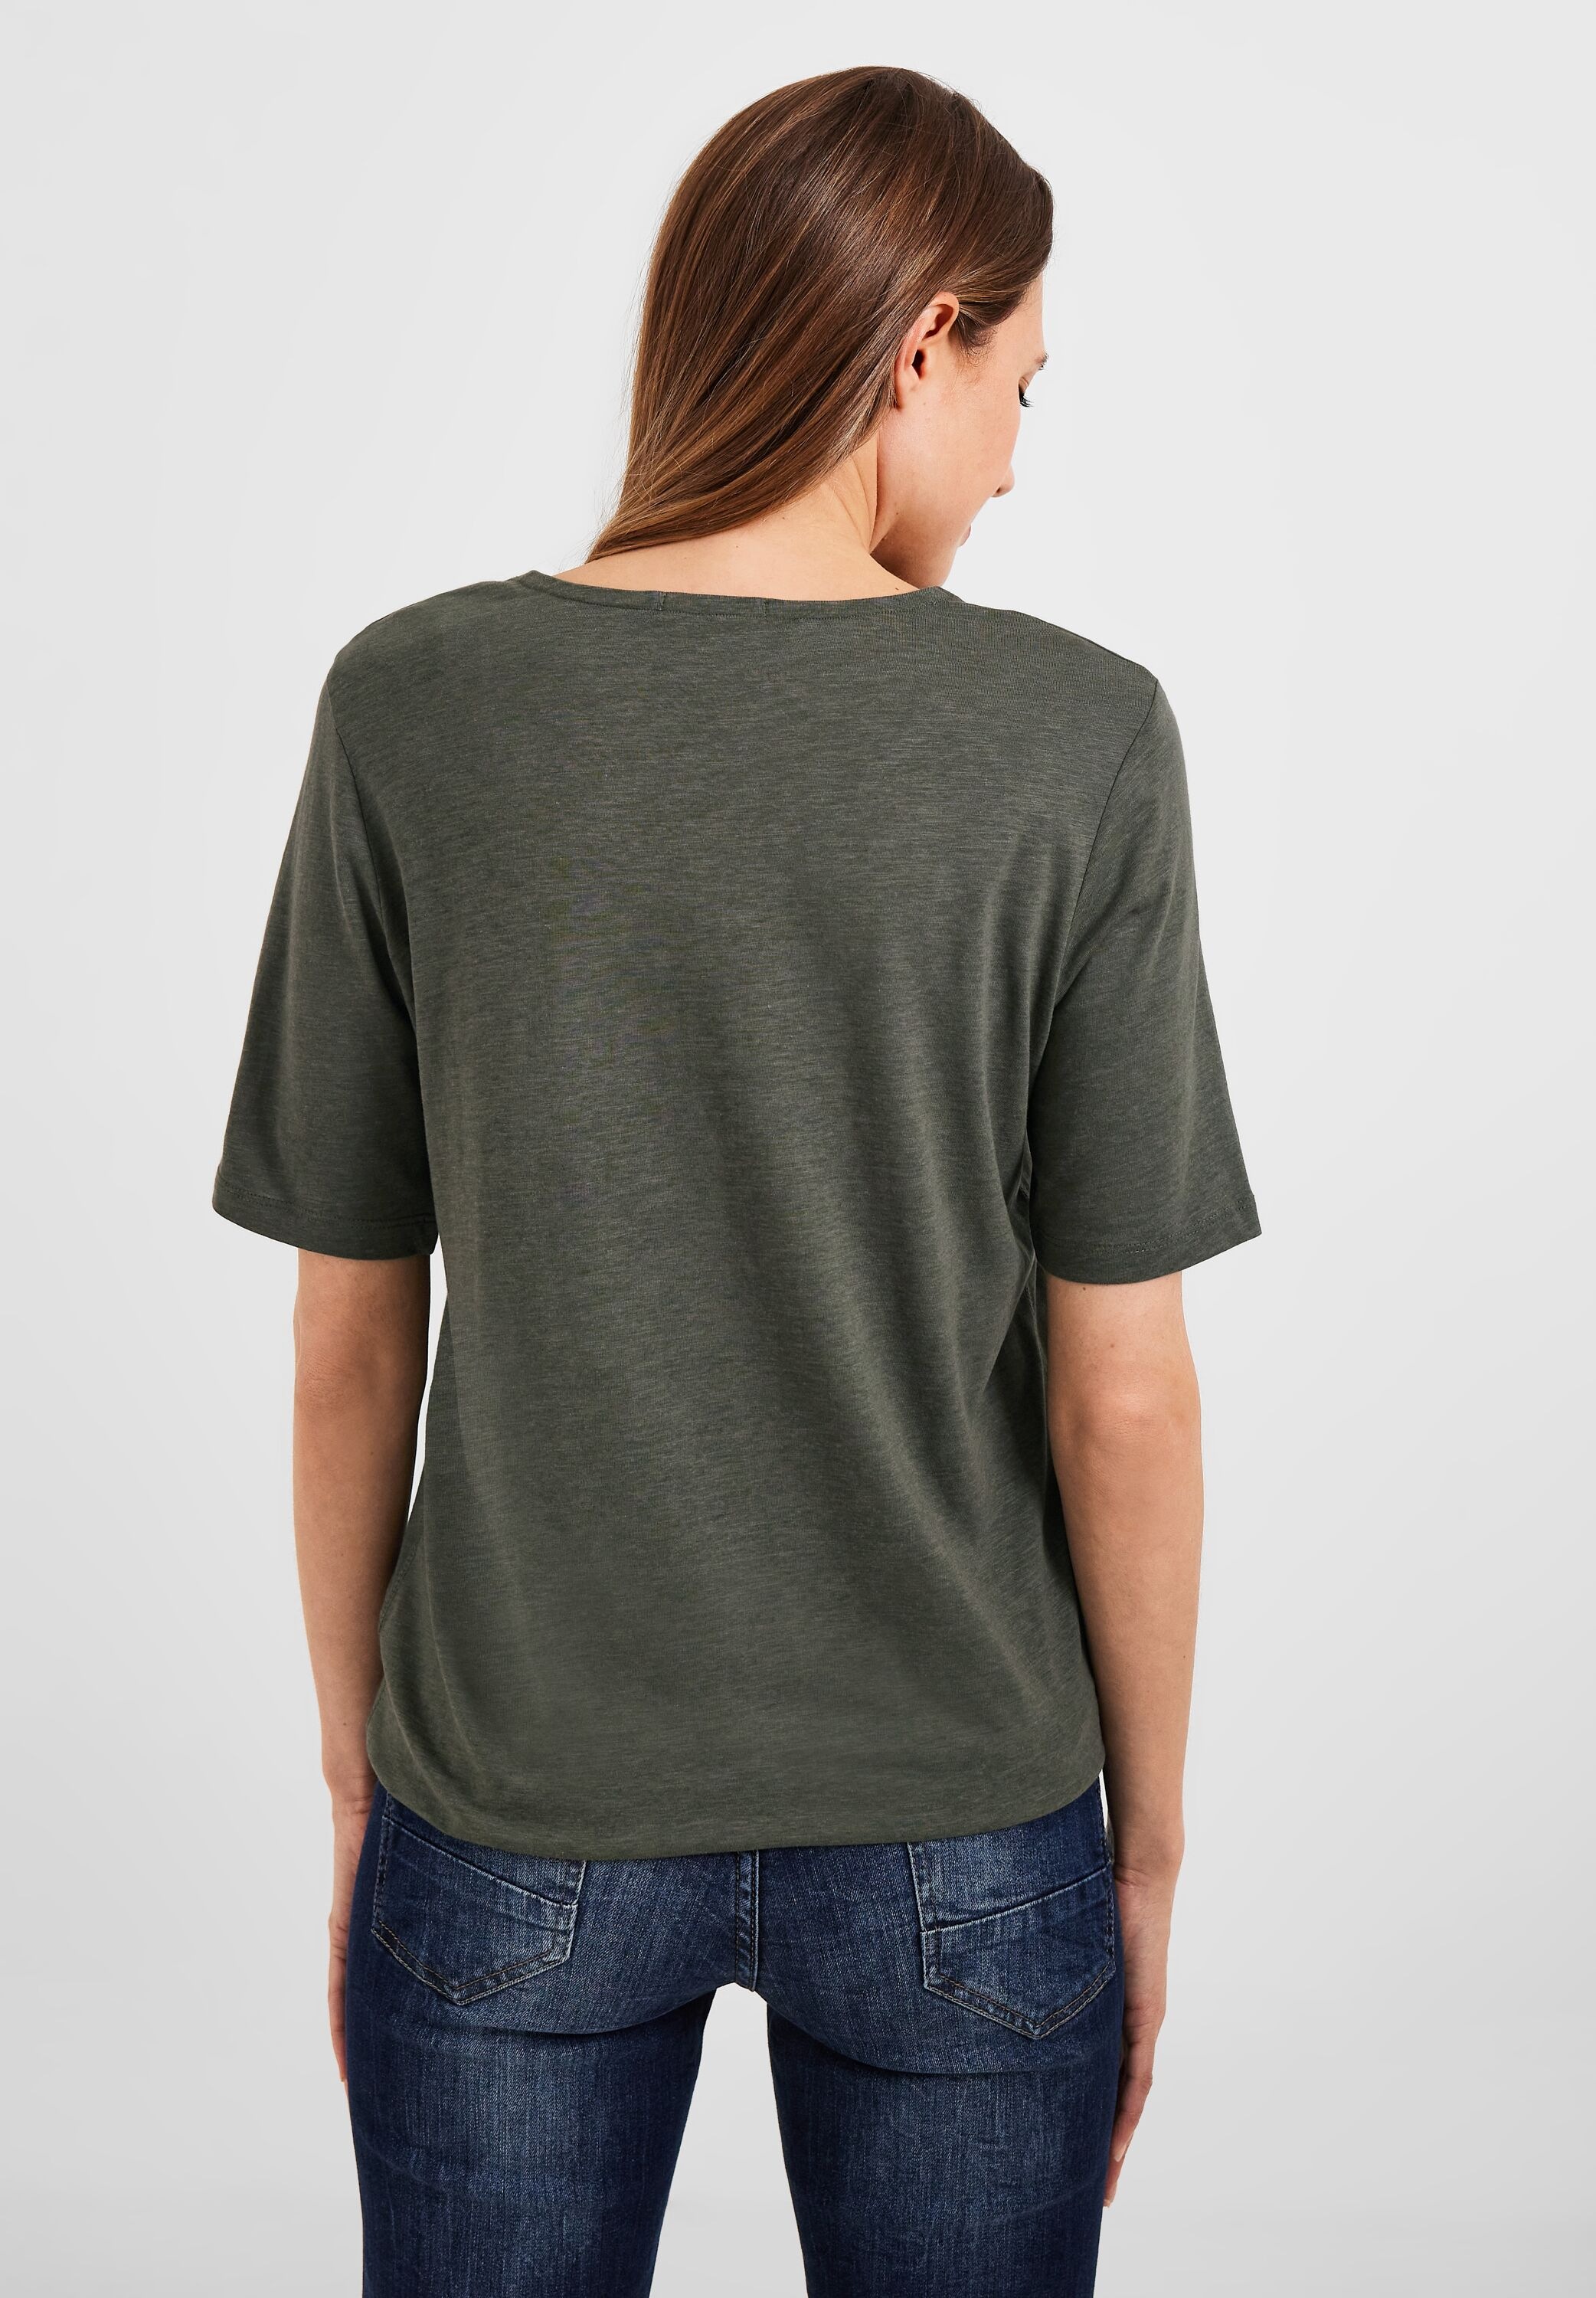 Black Friday Cecil BAUR aus | T-Shirt, Materialmix softem